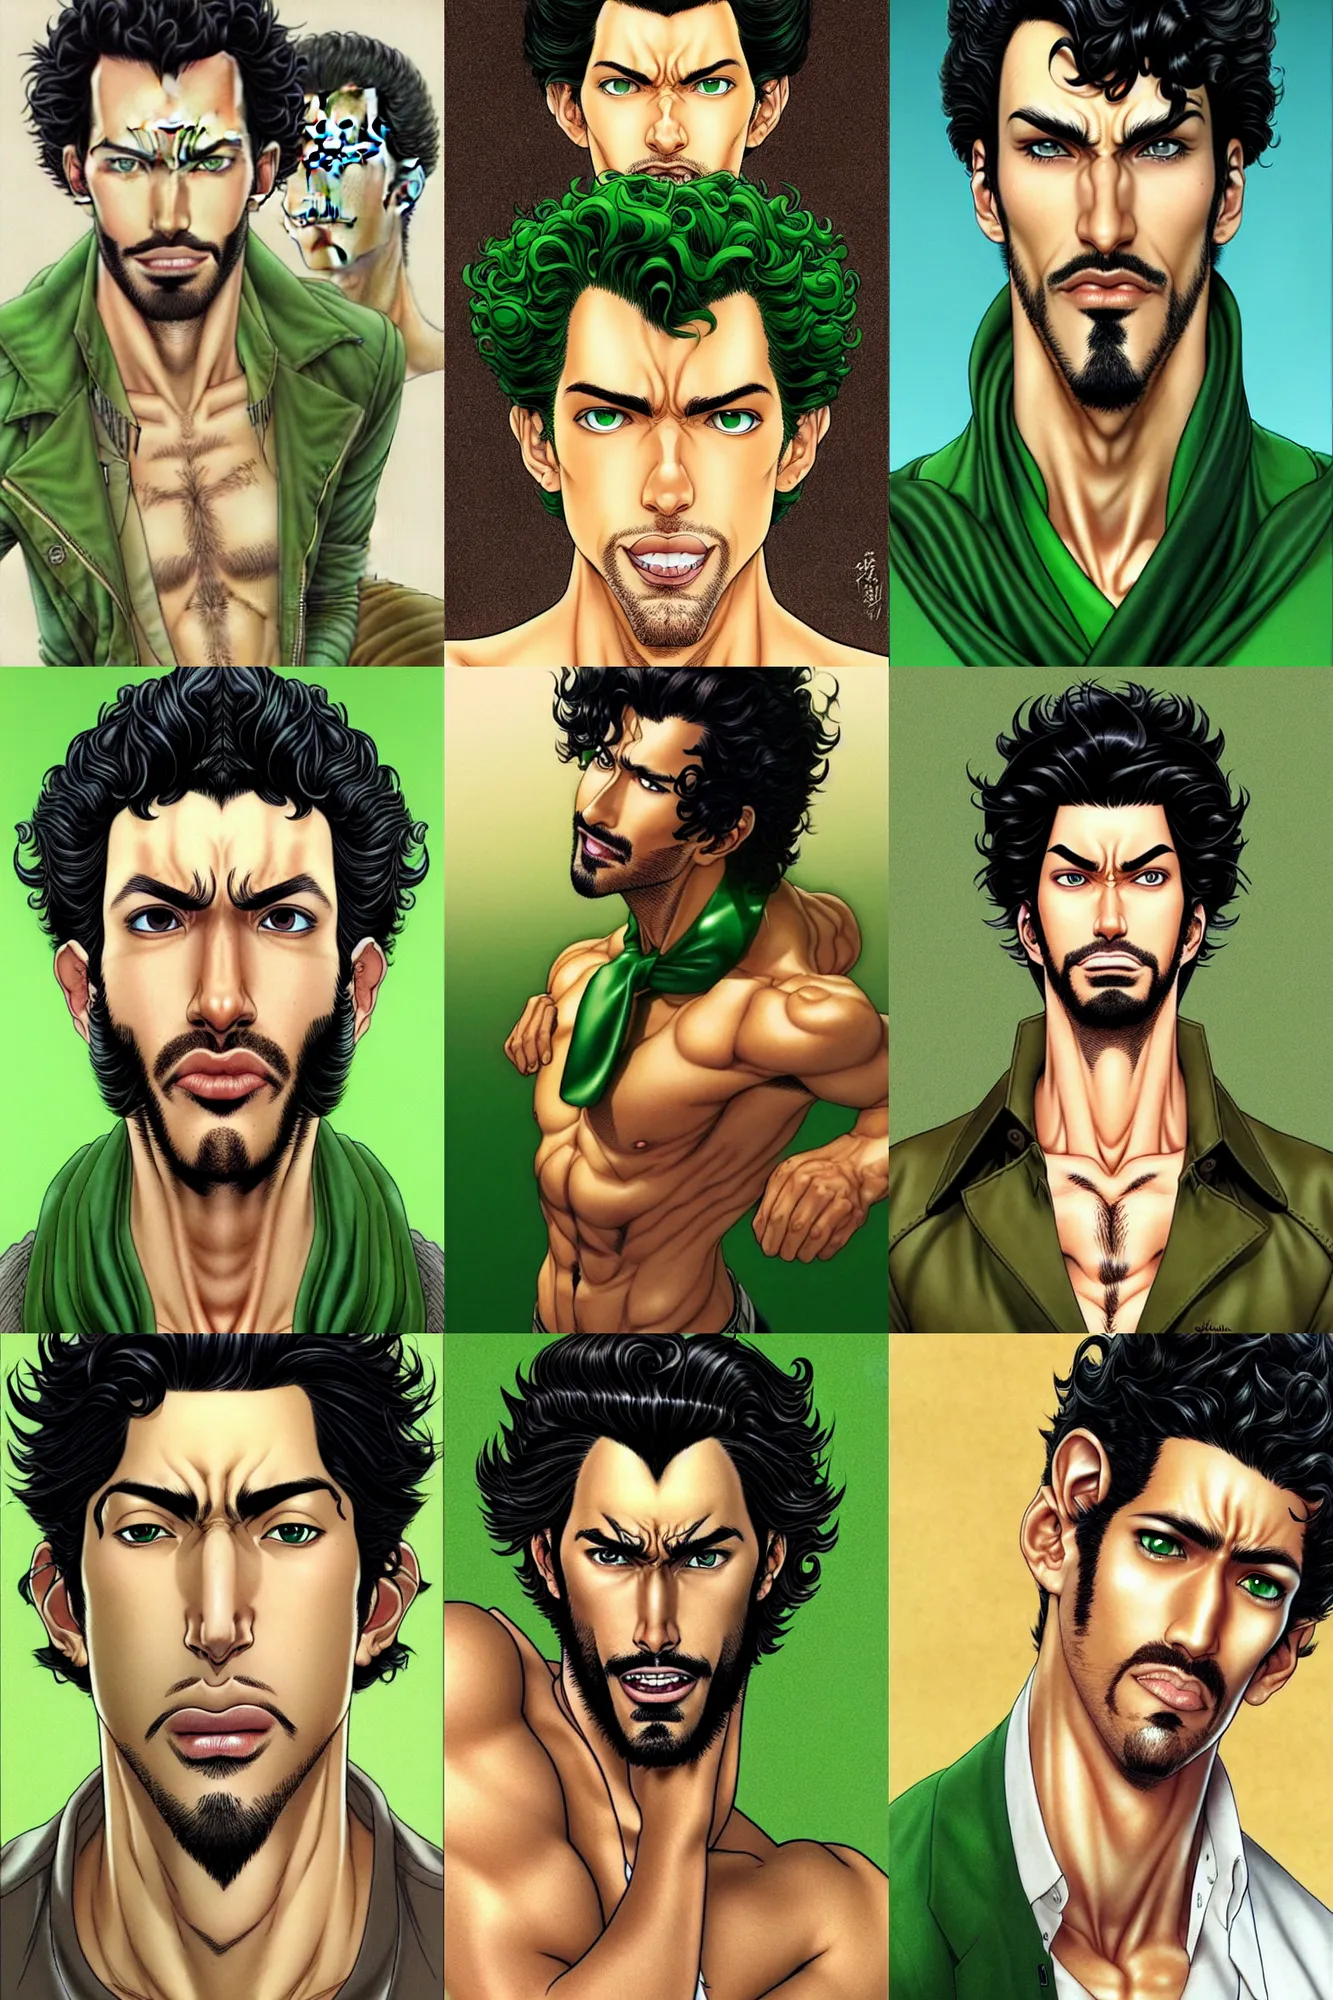 Prompt: handsome!! hyper realistic man with curly black hair, tan skin, green eyes, anchor goatee | art by hirohiko araki & jean giraud & artgerm